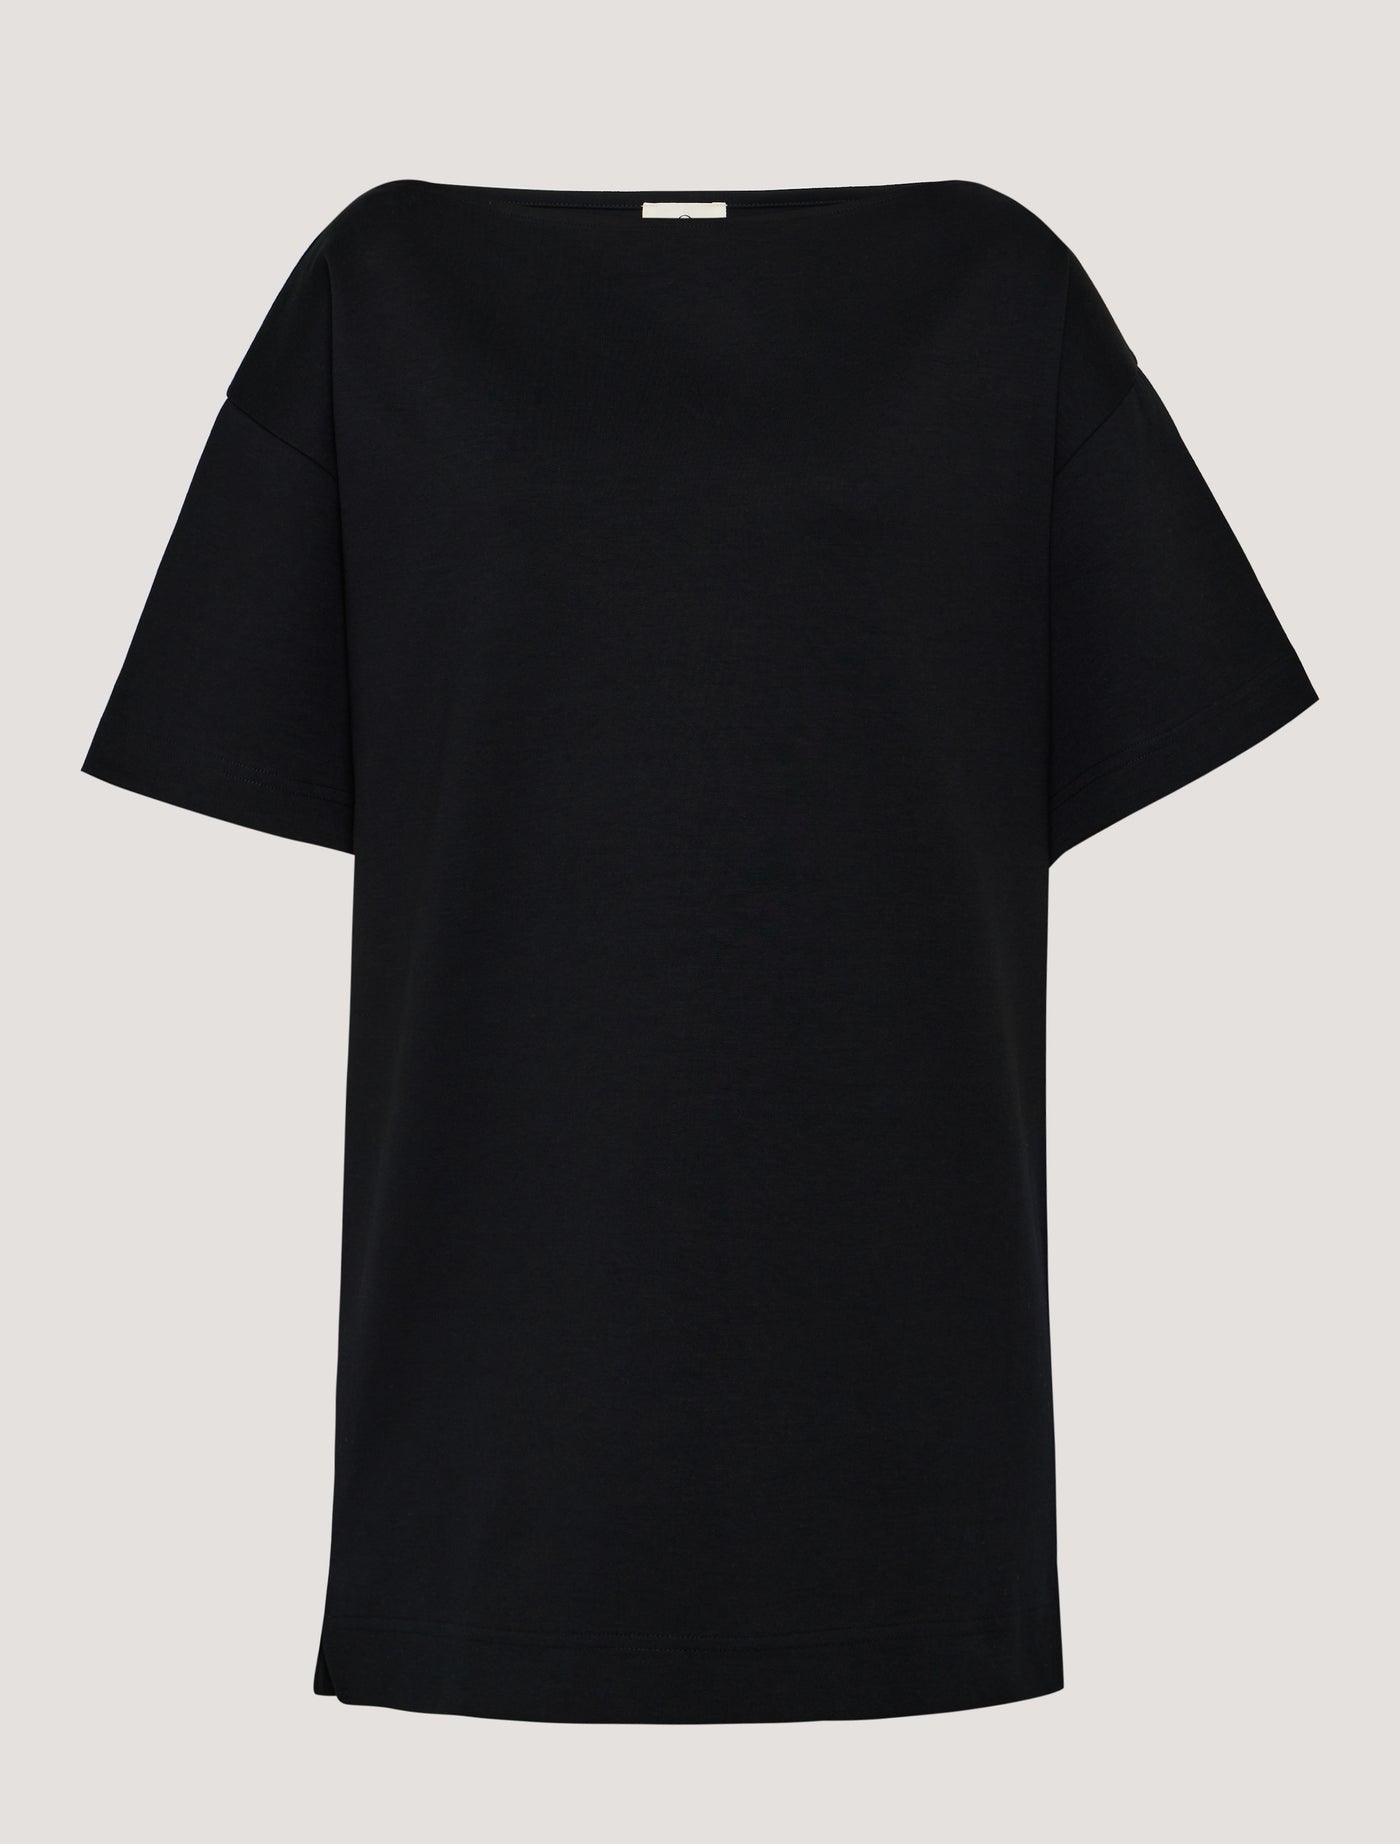 Gabo Organic Cotton T-Shirt in Black